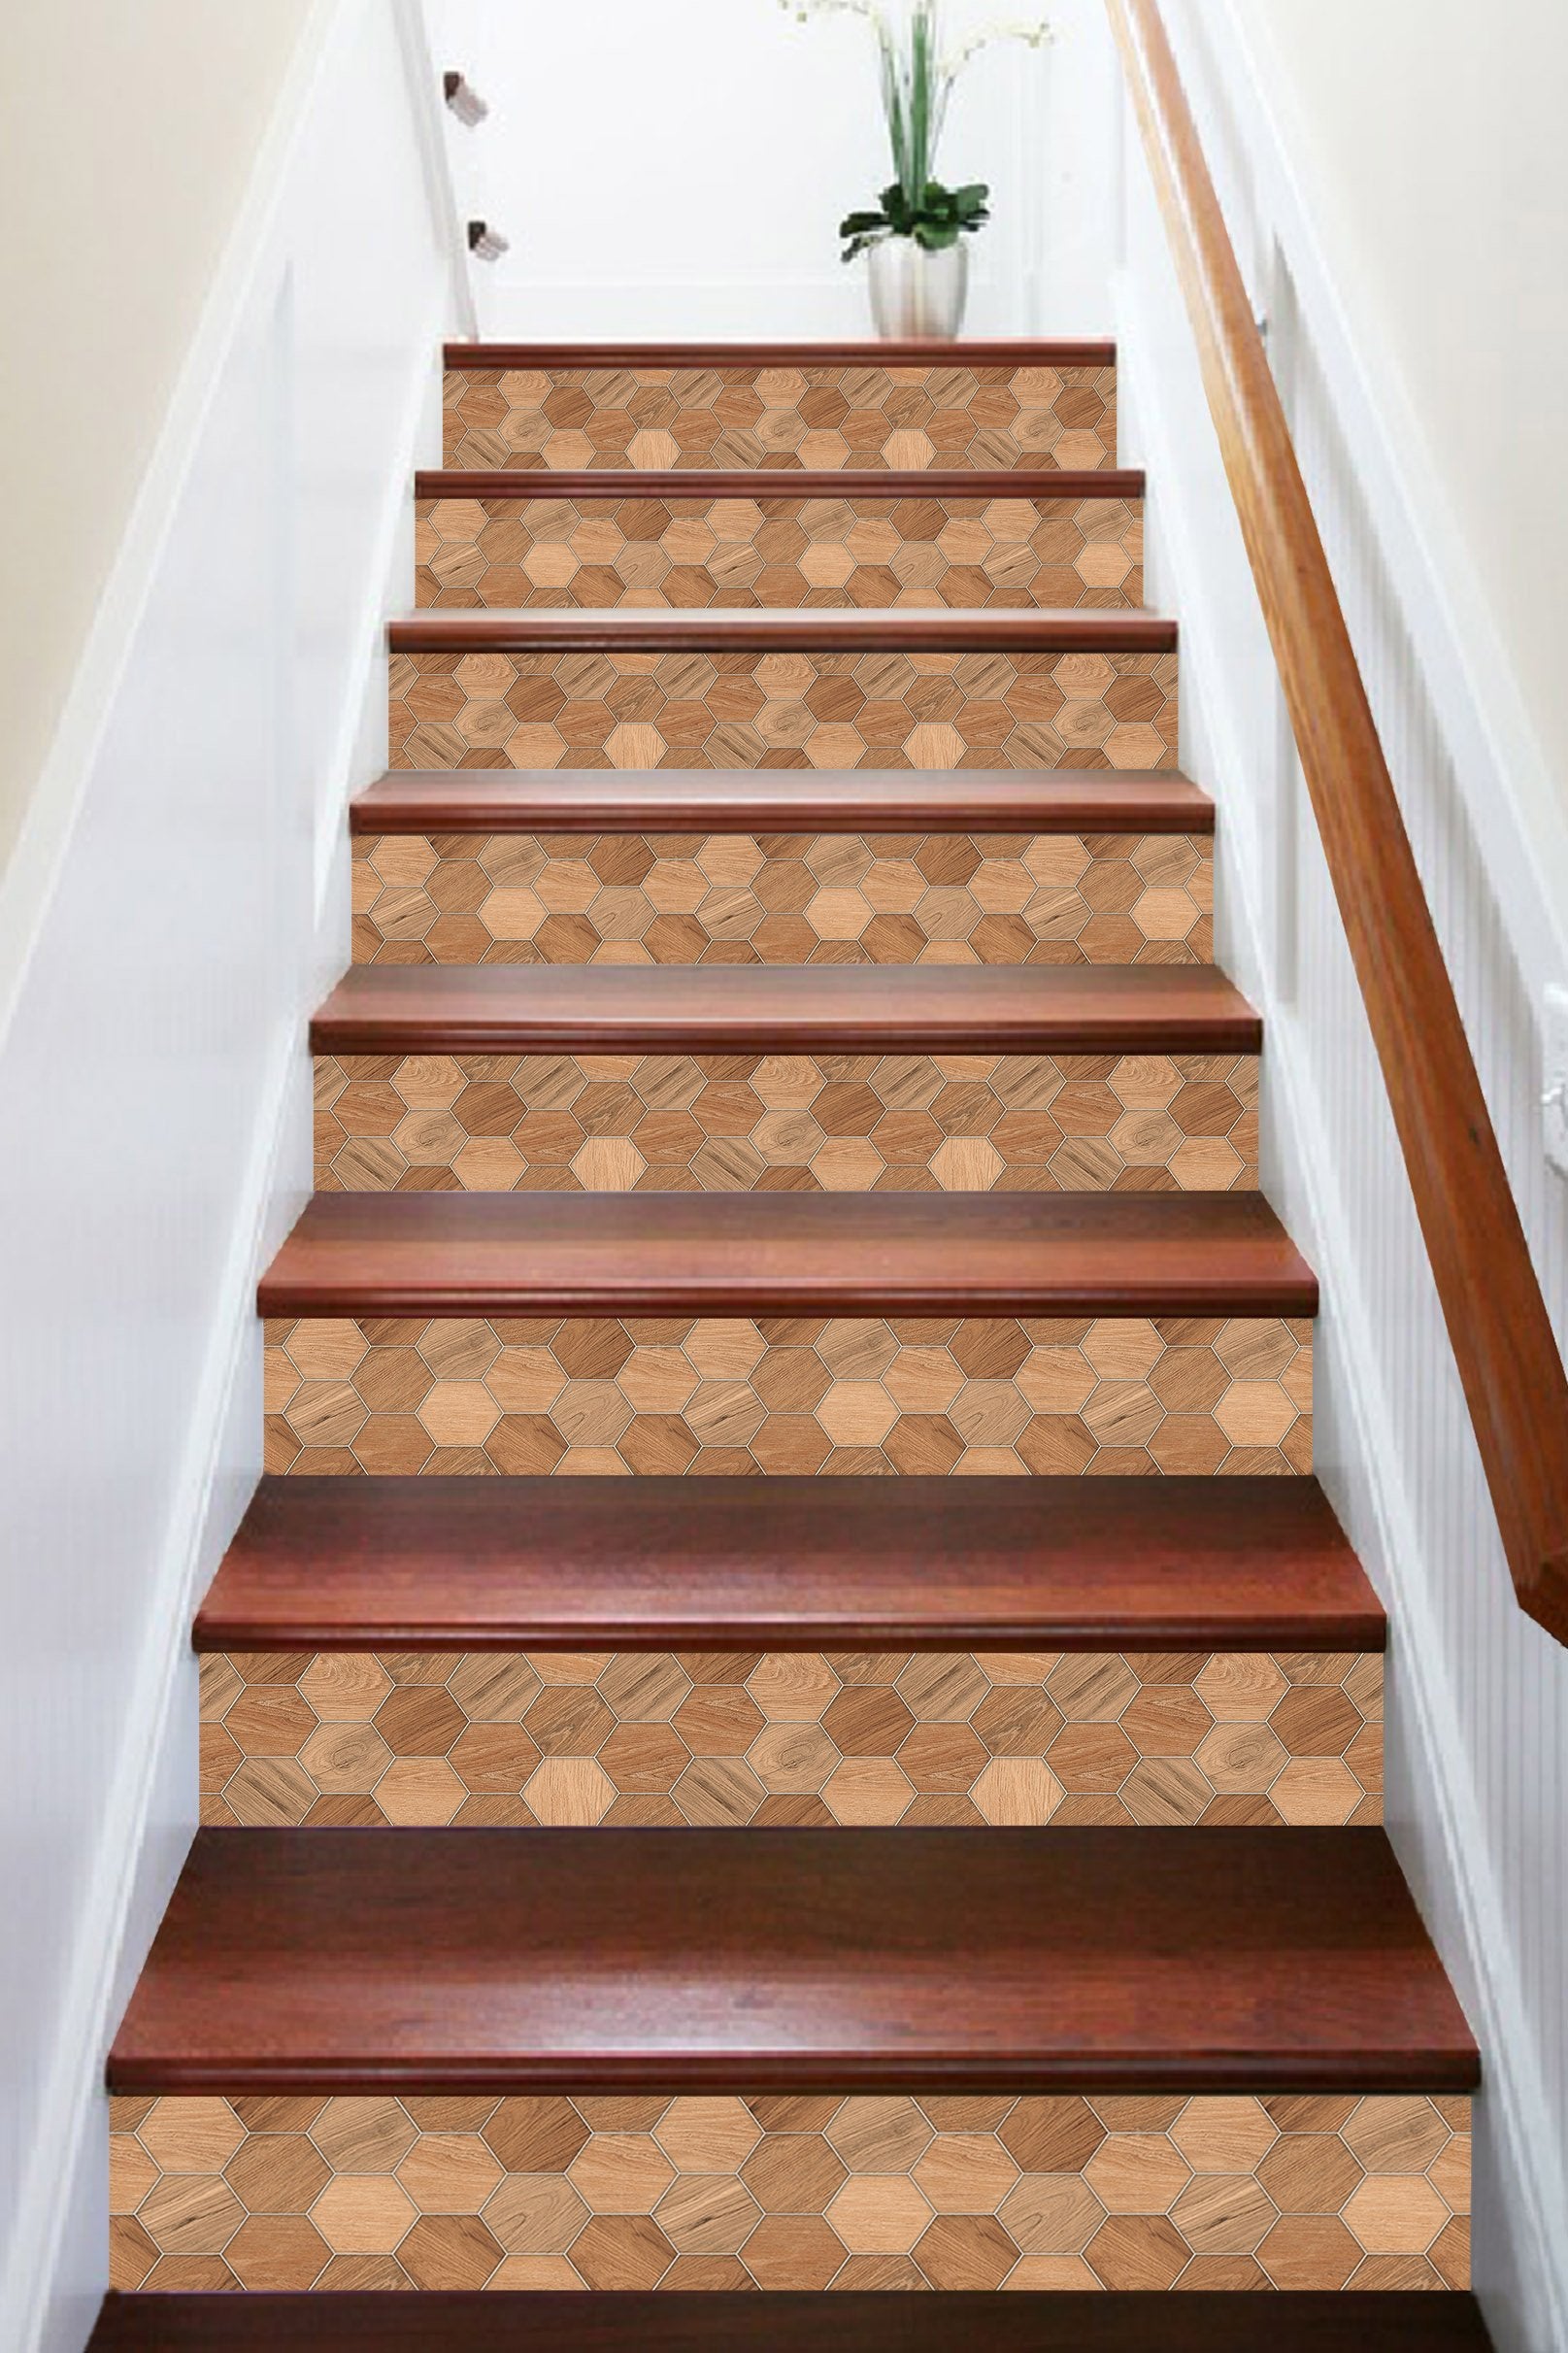 3D Honeycomb Wood Grain 884 Marble Tile Texture Stair Risers Wallpaper AJ Wallpaper 